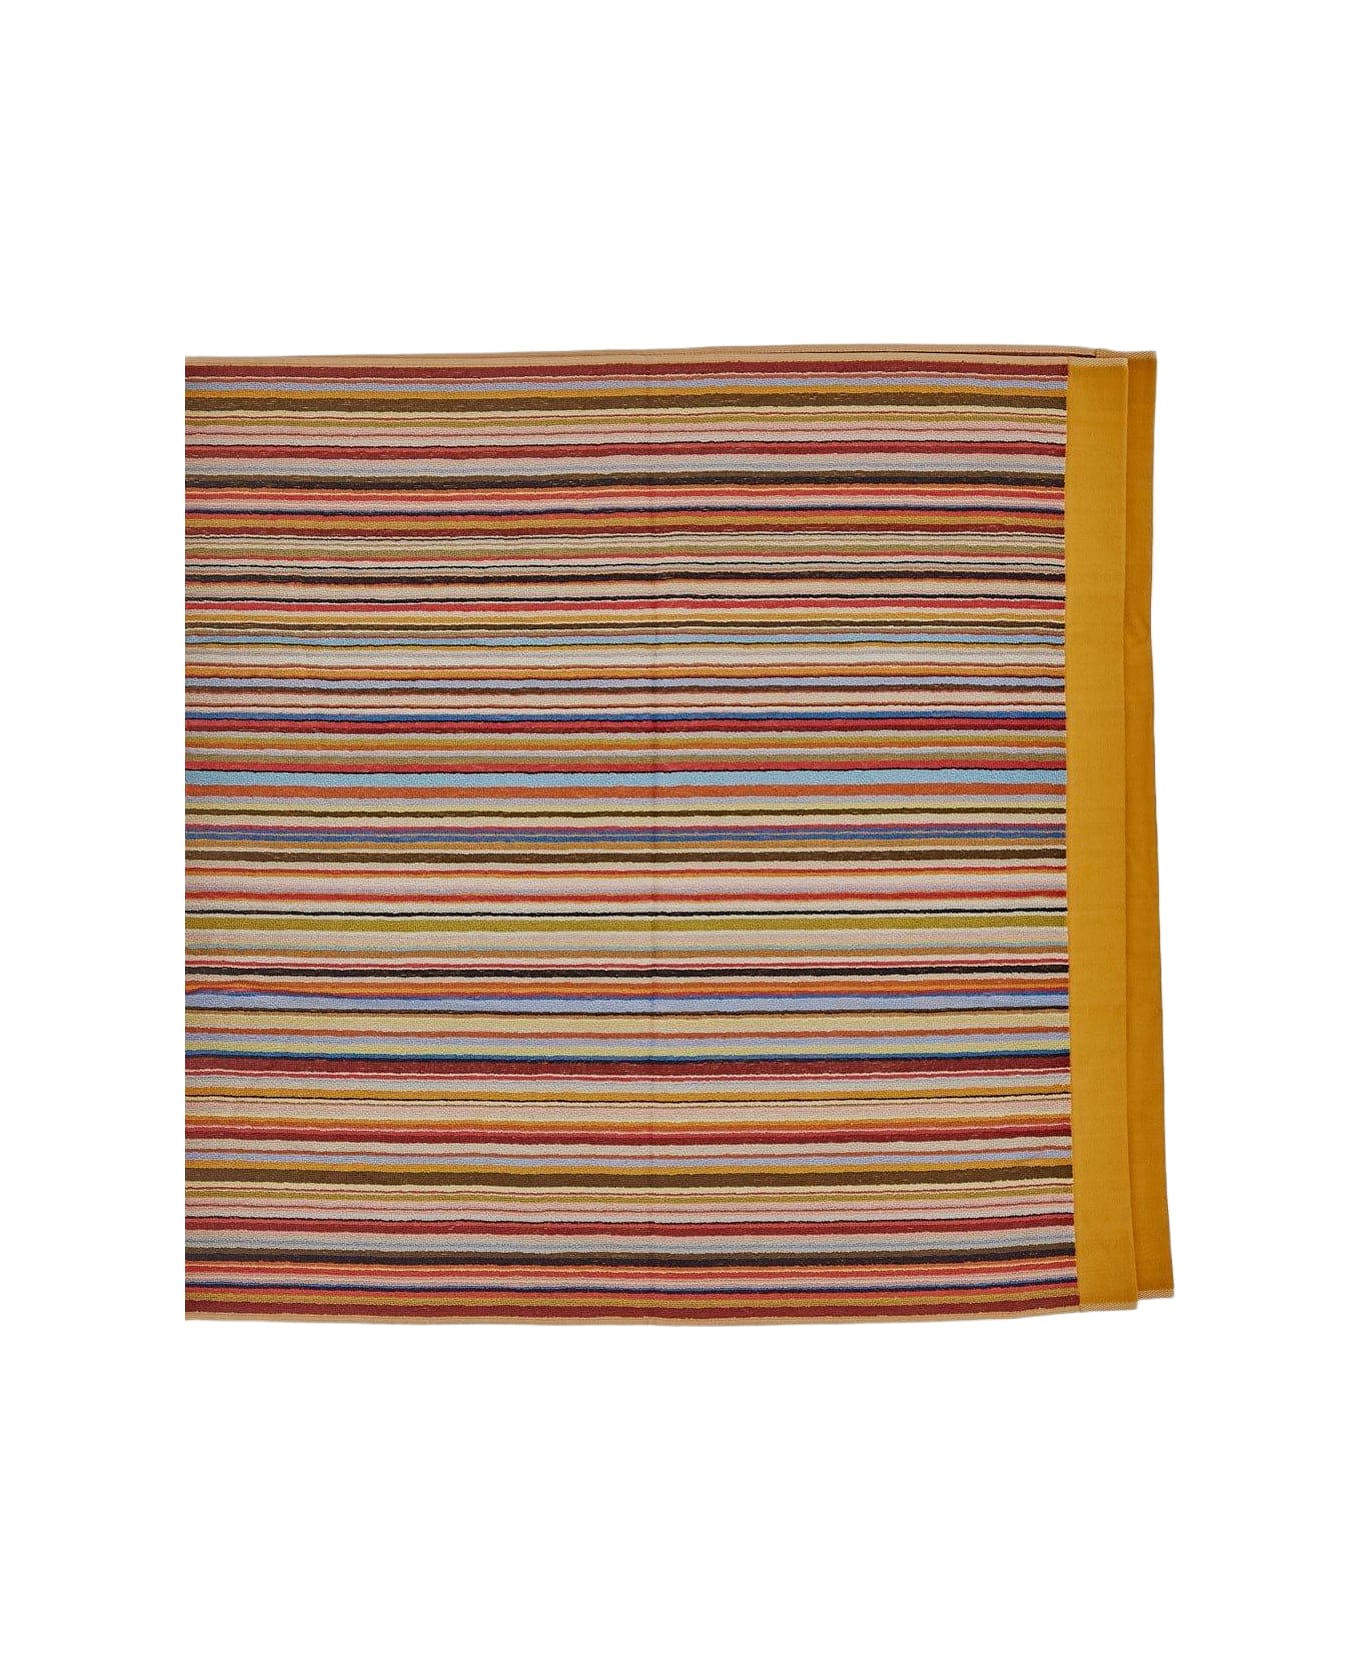 Paul Smith Striped Beach Towel - MultiColour タオル